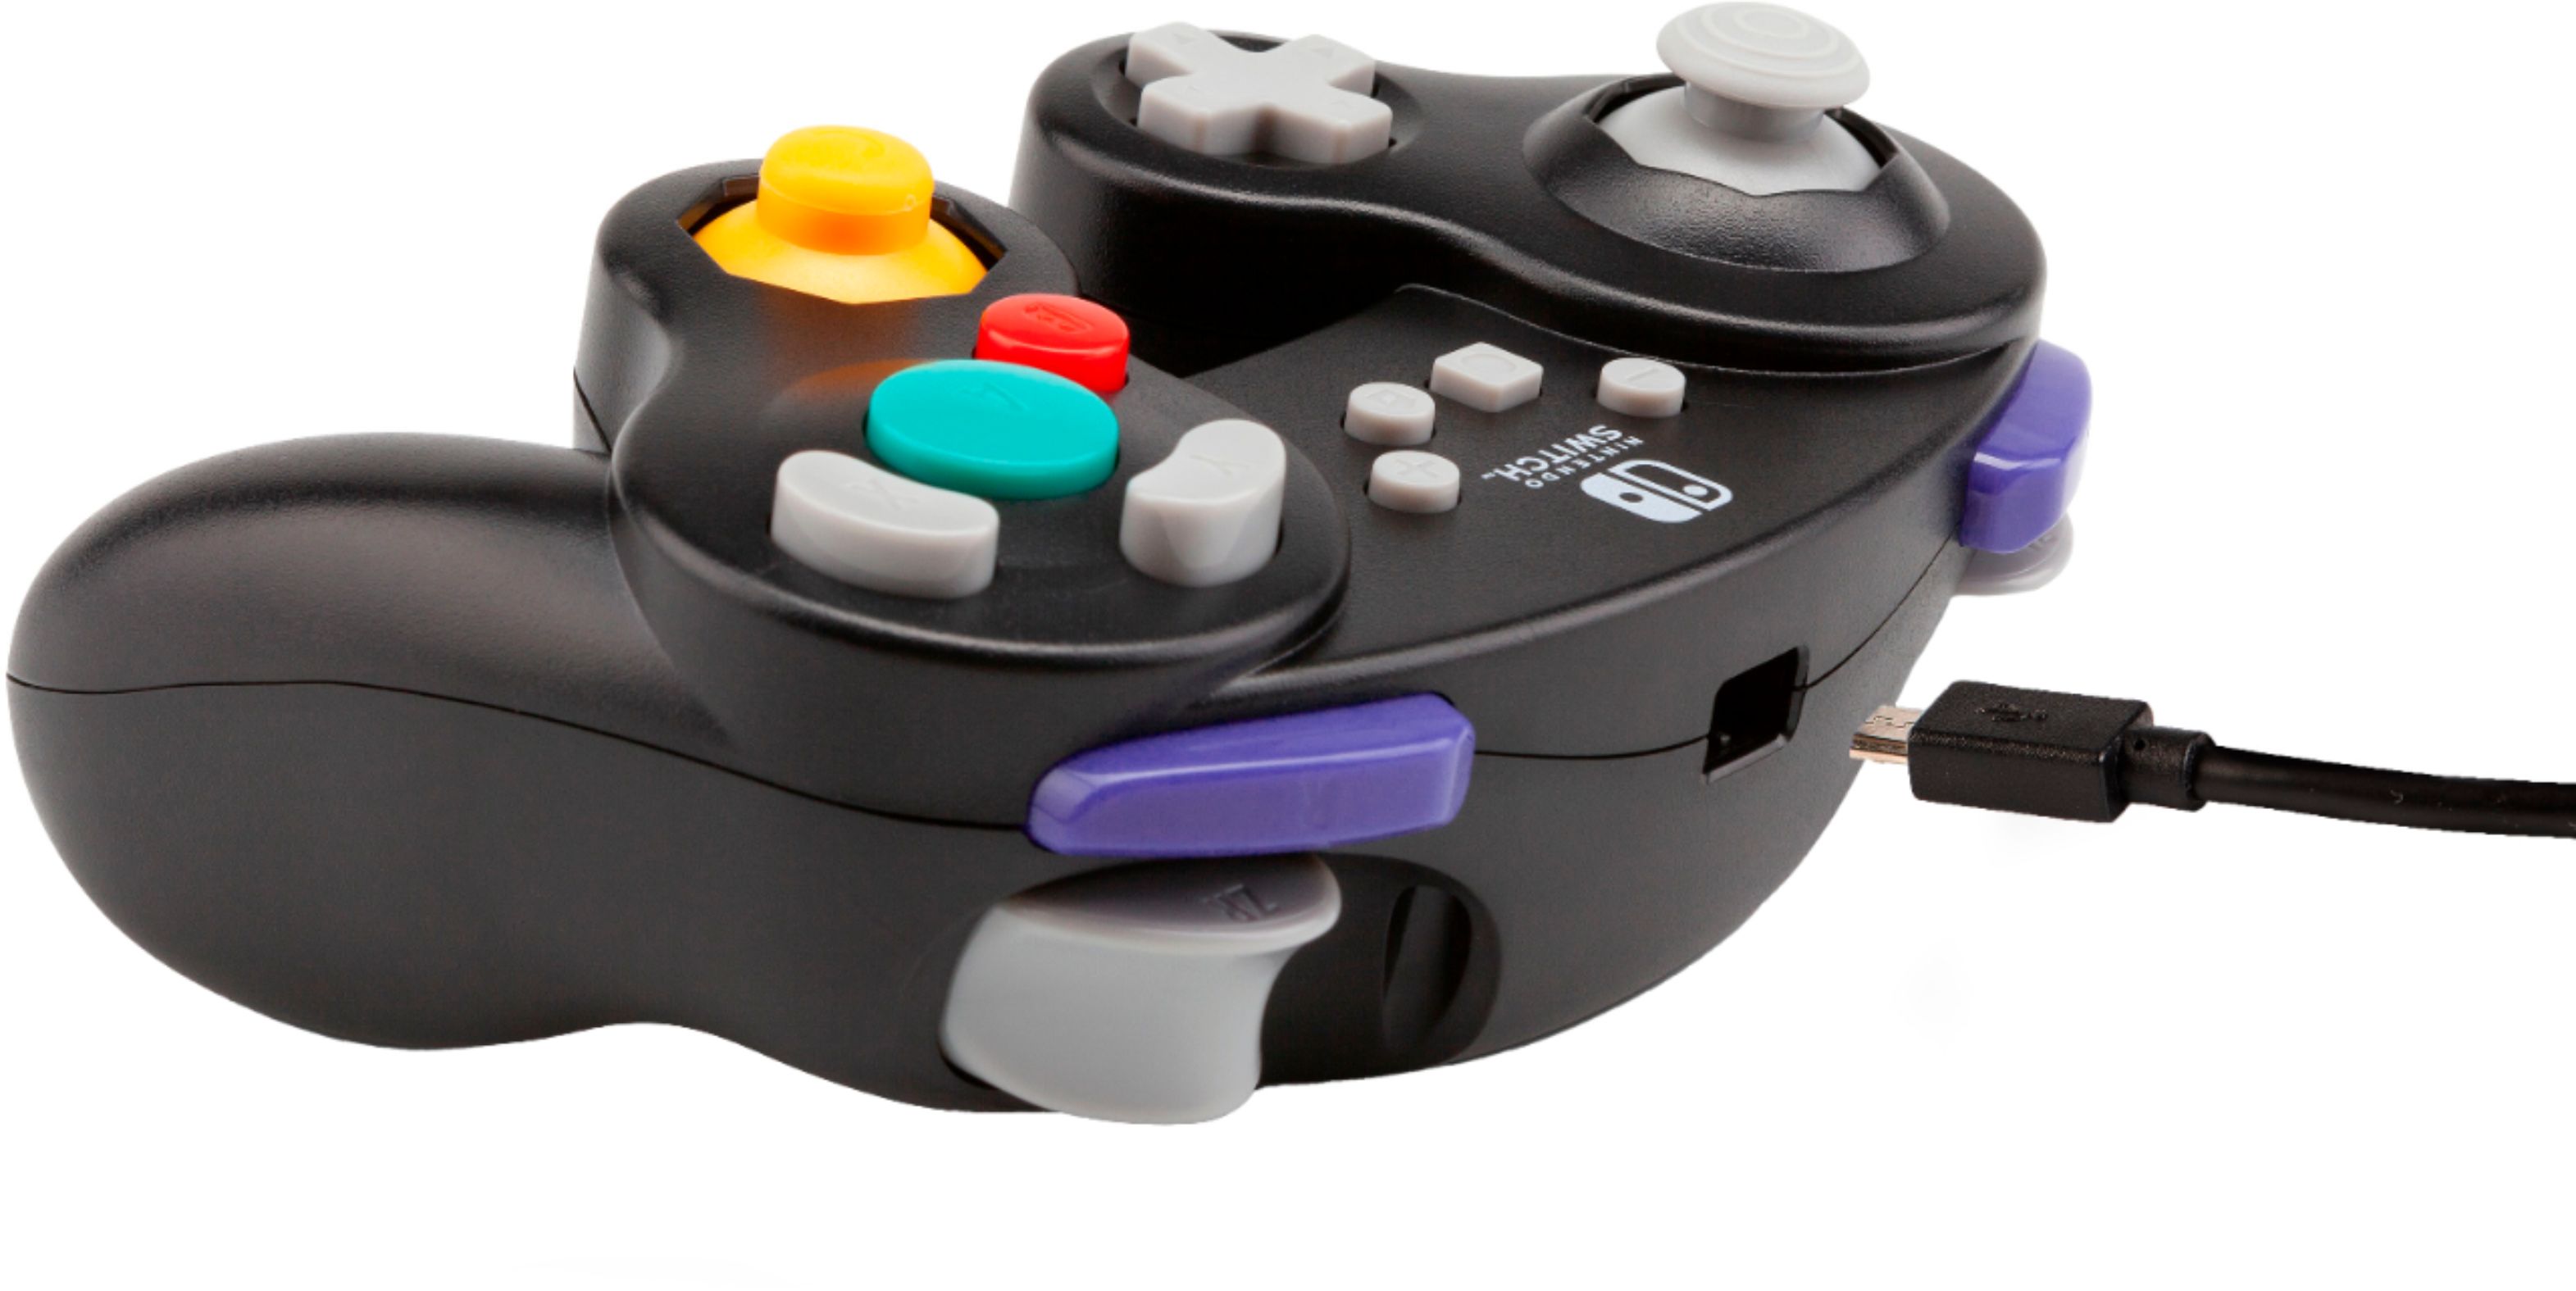 best buy gamecube controller switch